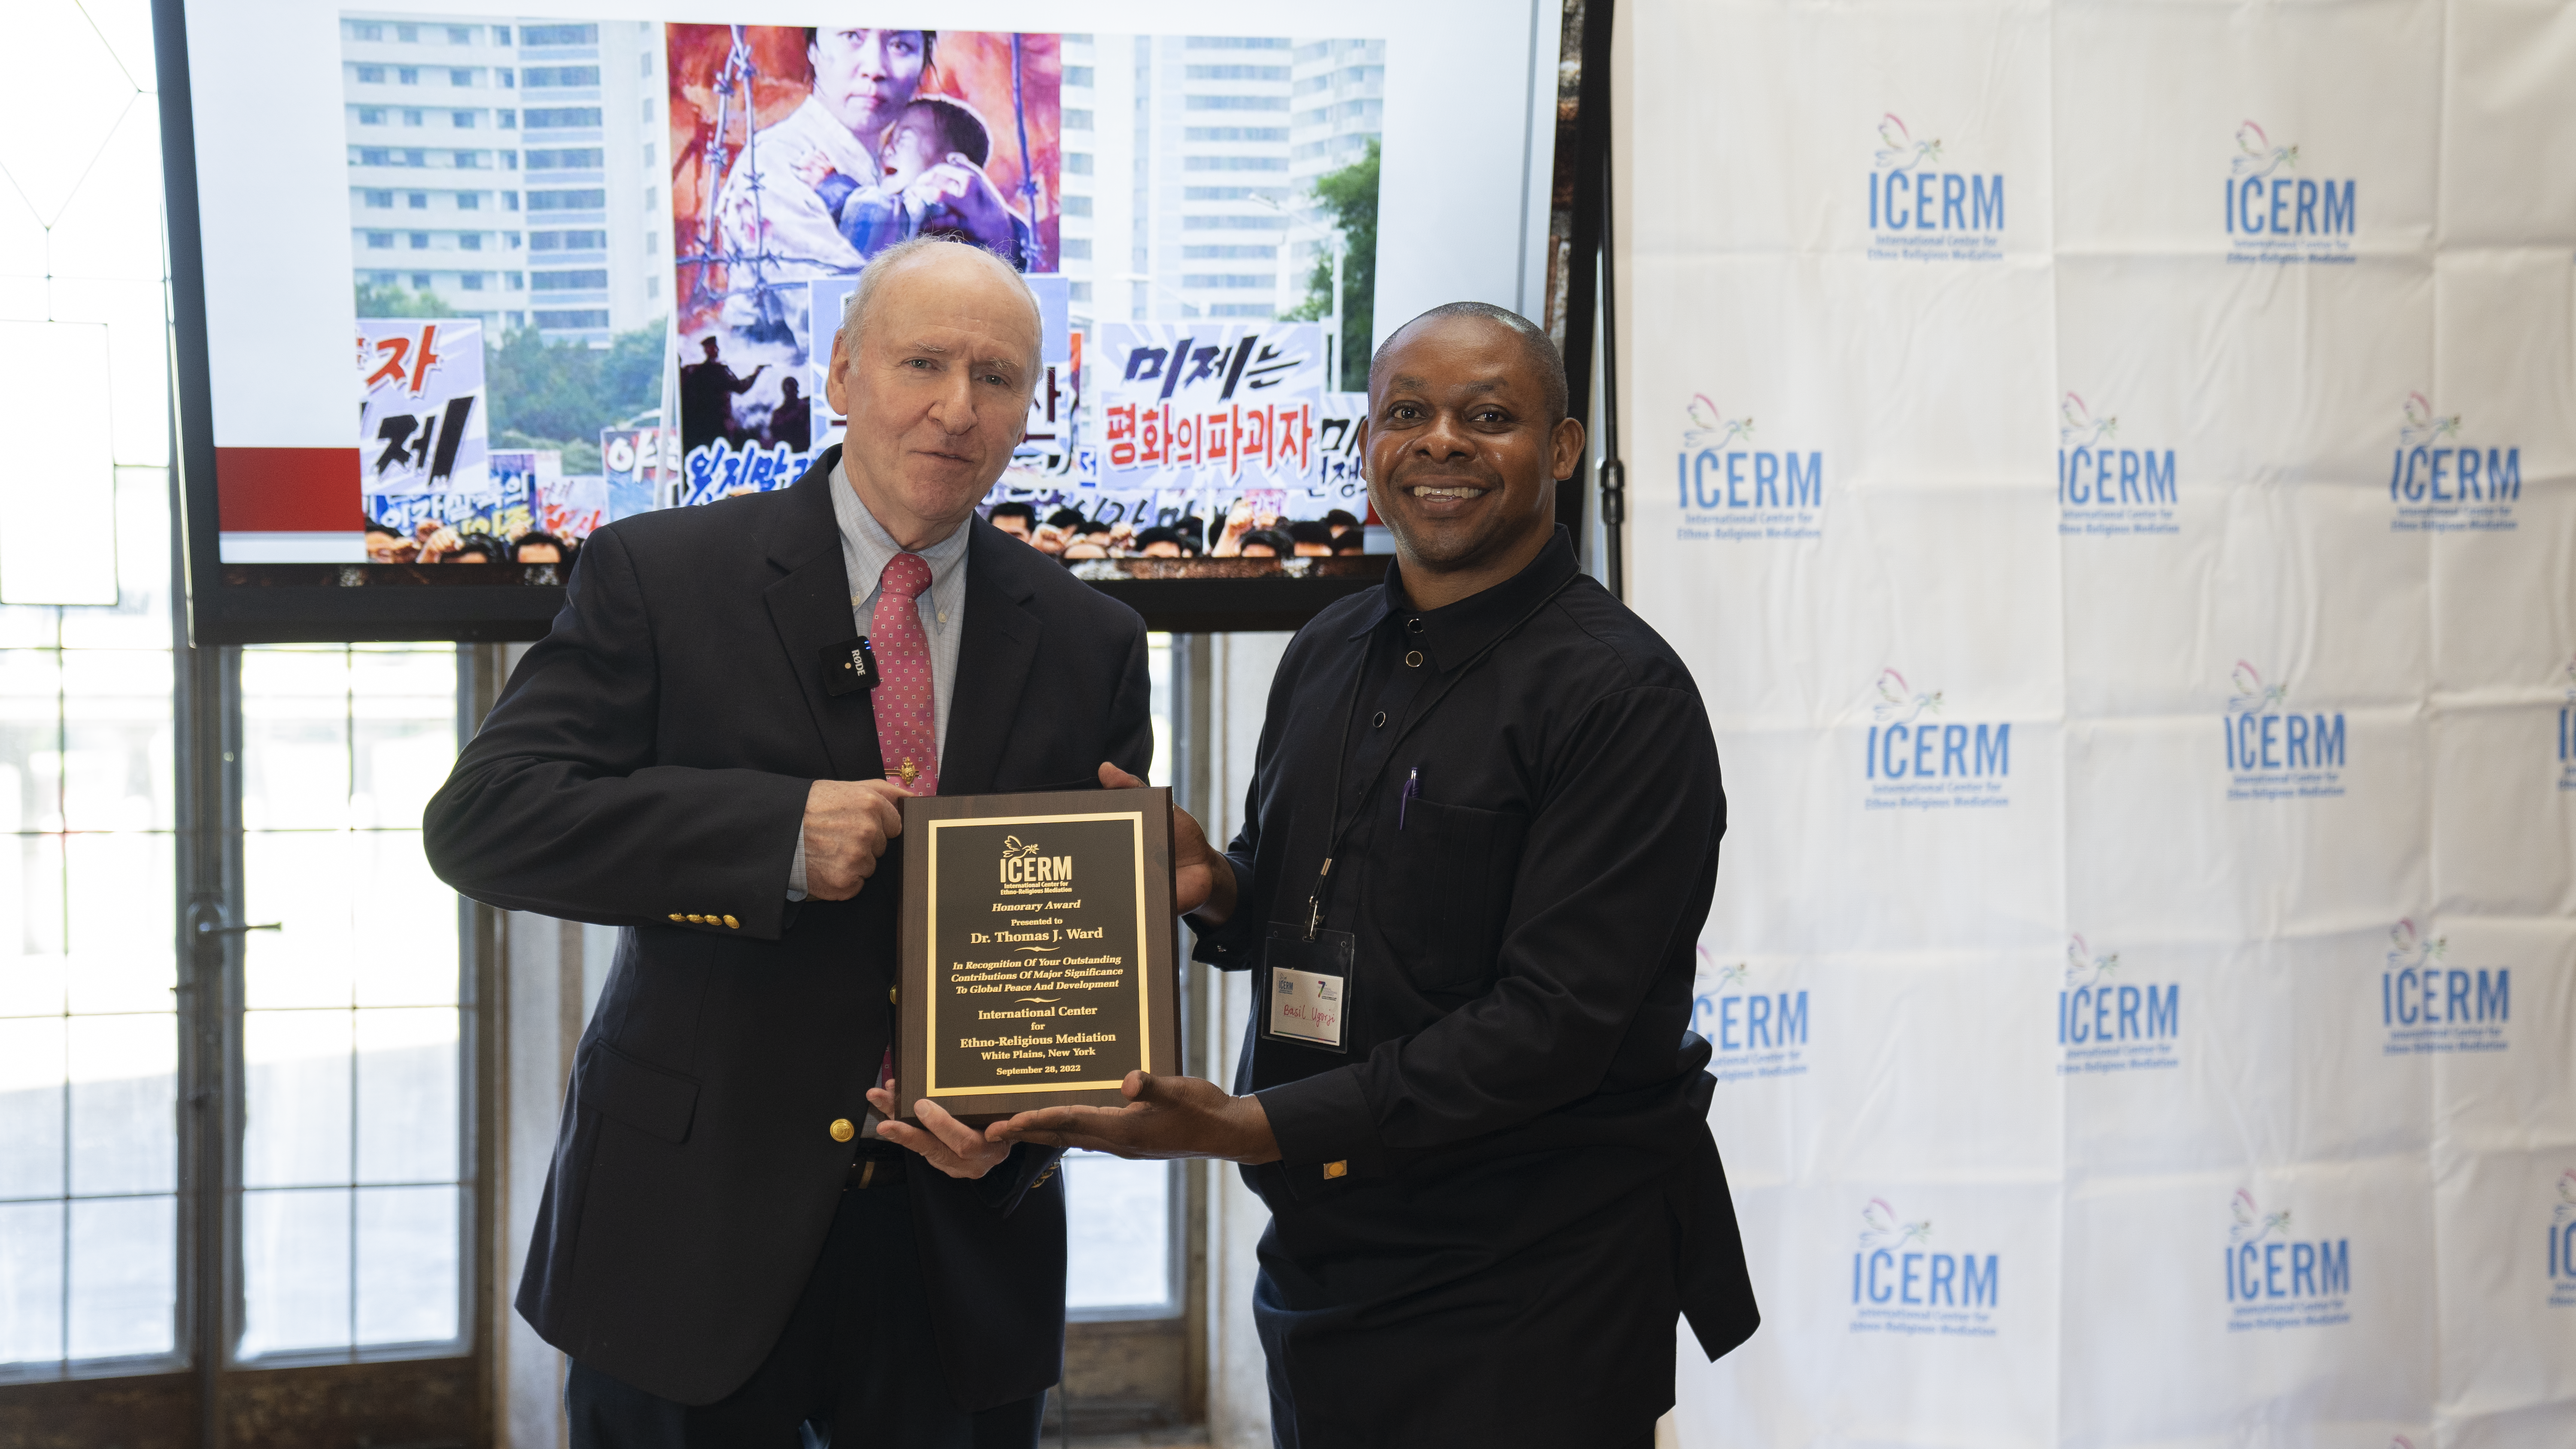 Dr. Basil Ugorji presenting the ICERMediation Award to Dr. Thomas J. Ward